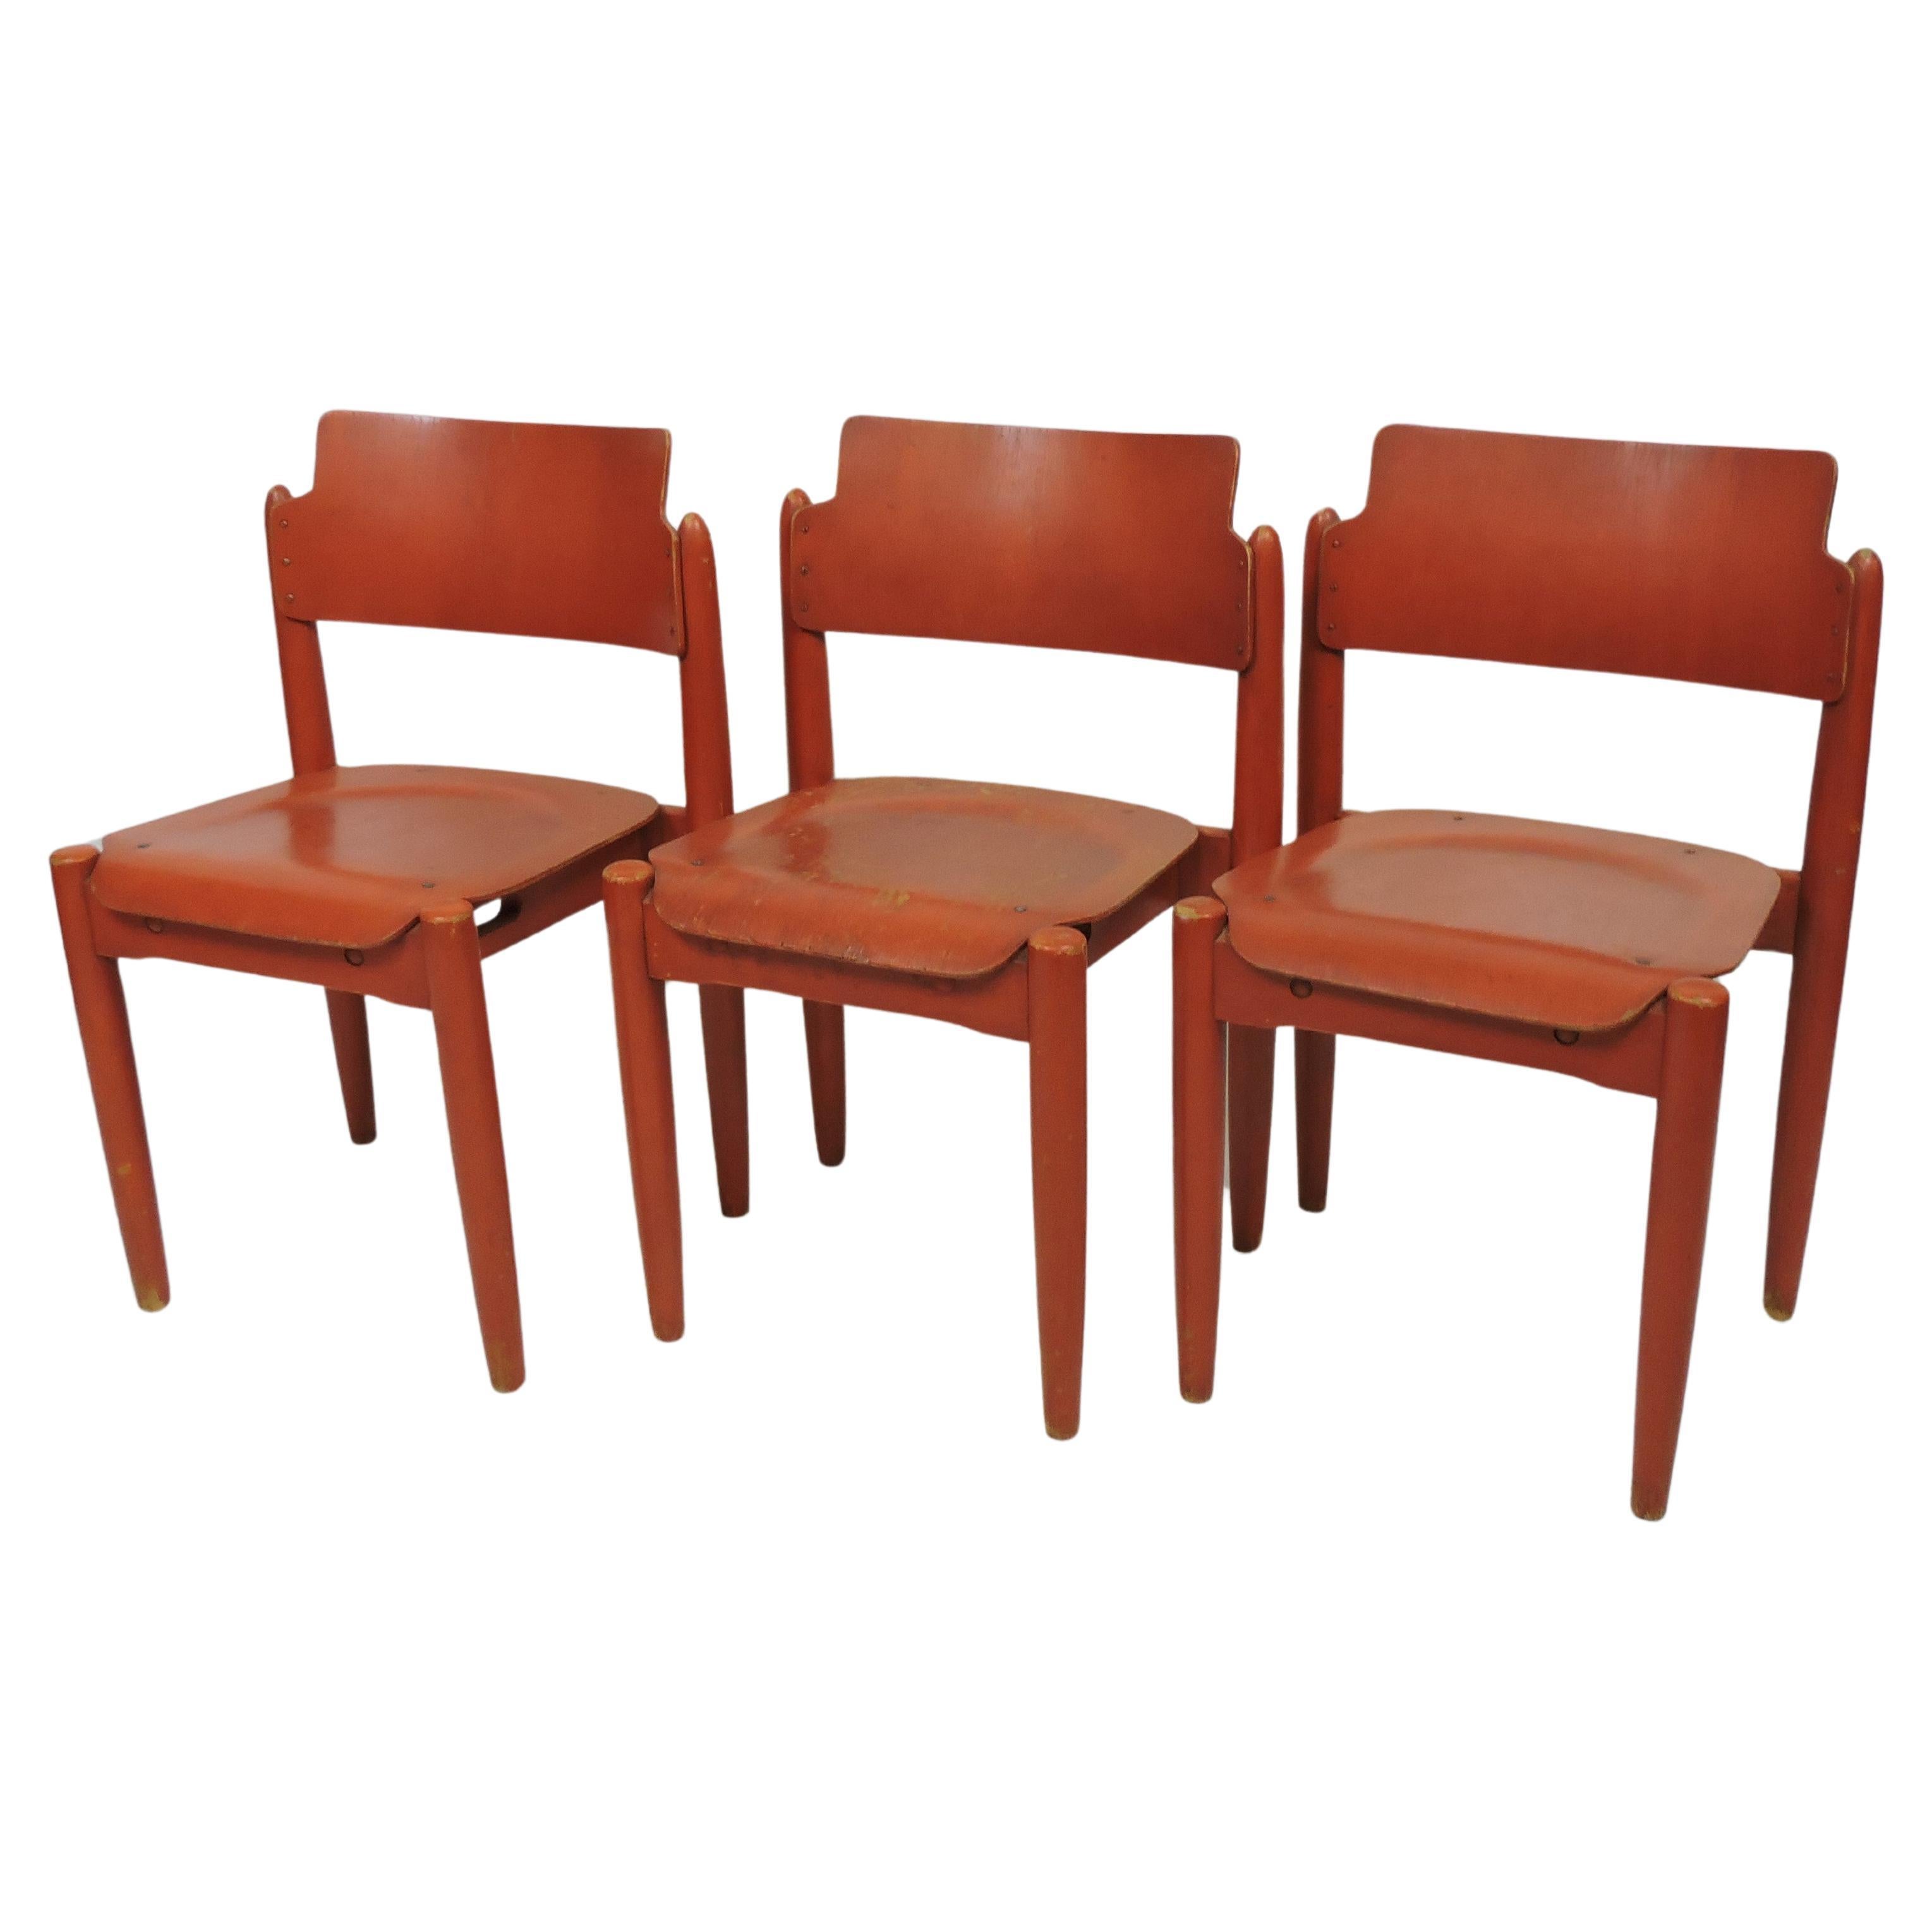  Ilmari Tapiovaara ensemble de 3 chaises Wilman empilables rares scandinaves modernes